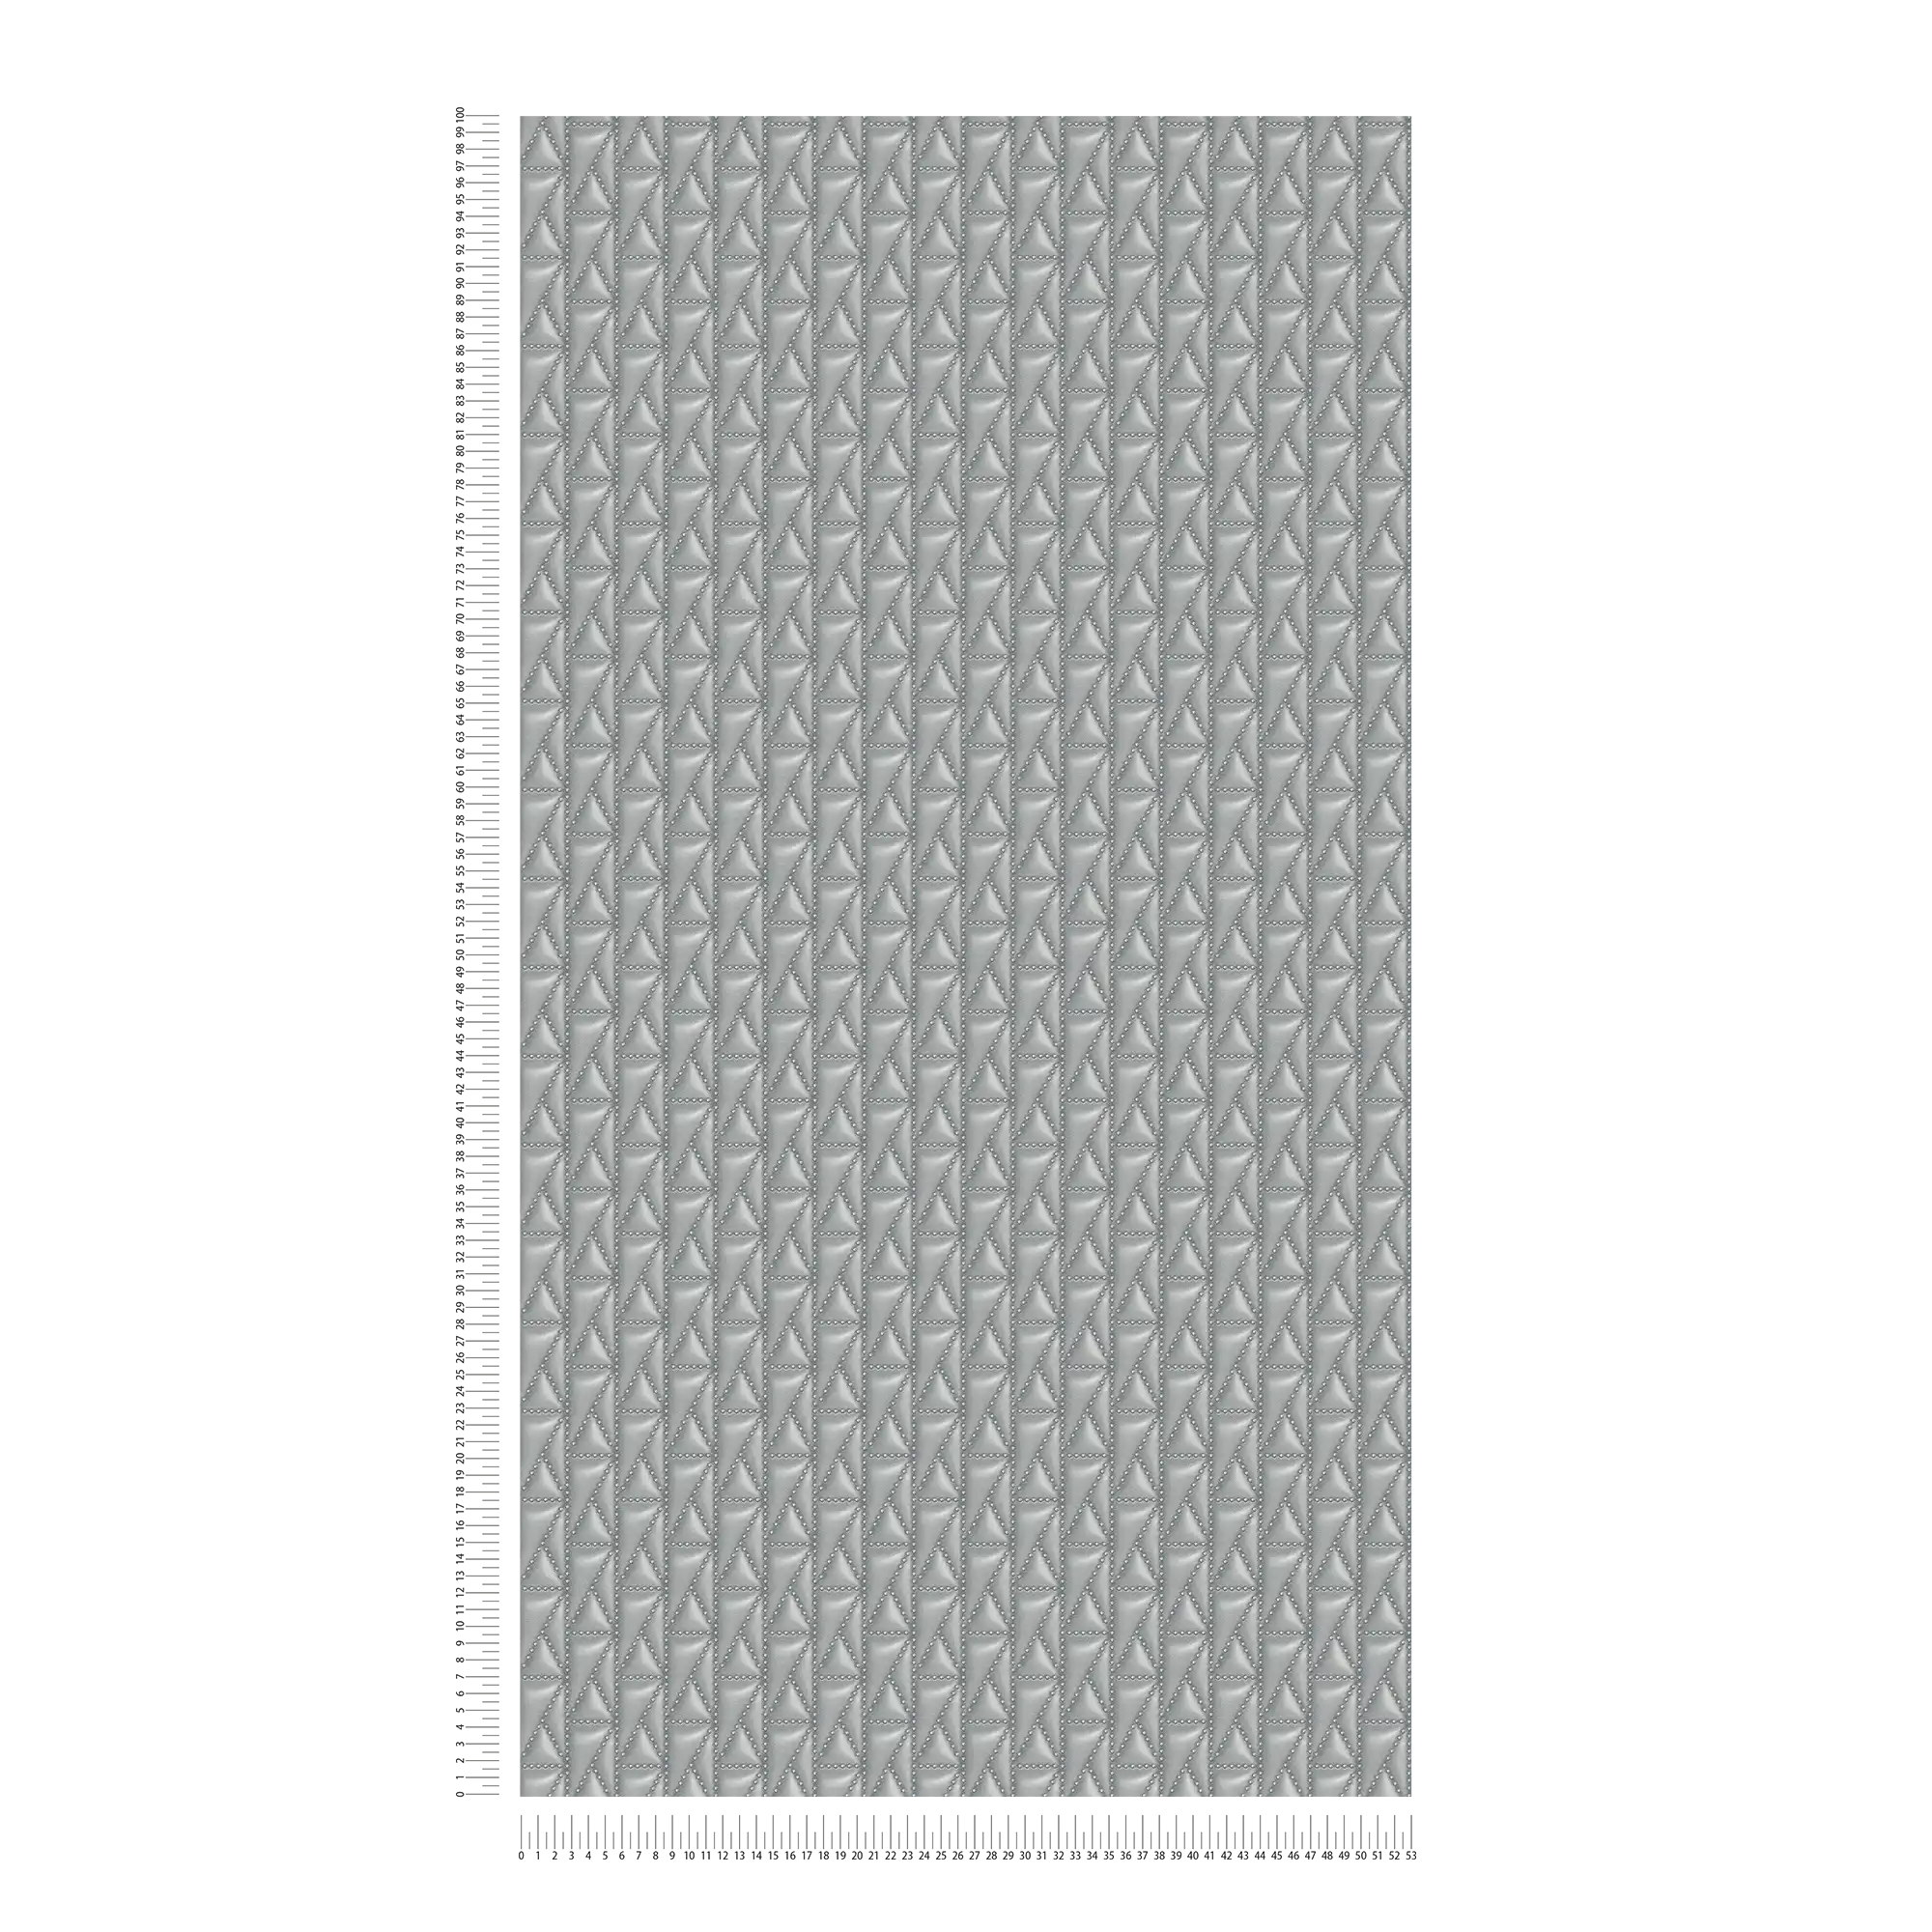             Karl LAGERFELD vliesbehang quilt pocket design - grijs
        